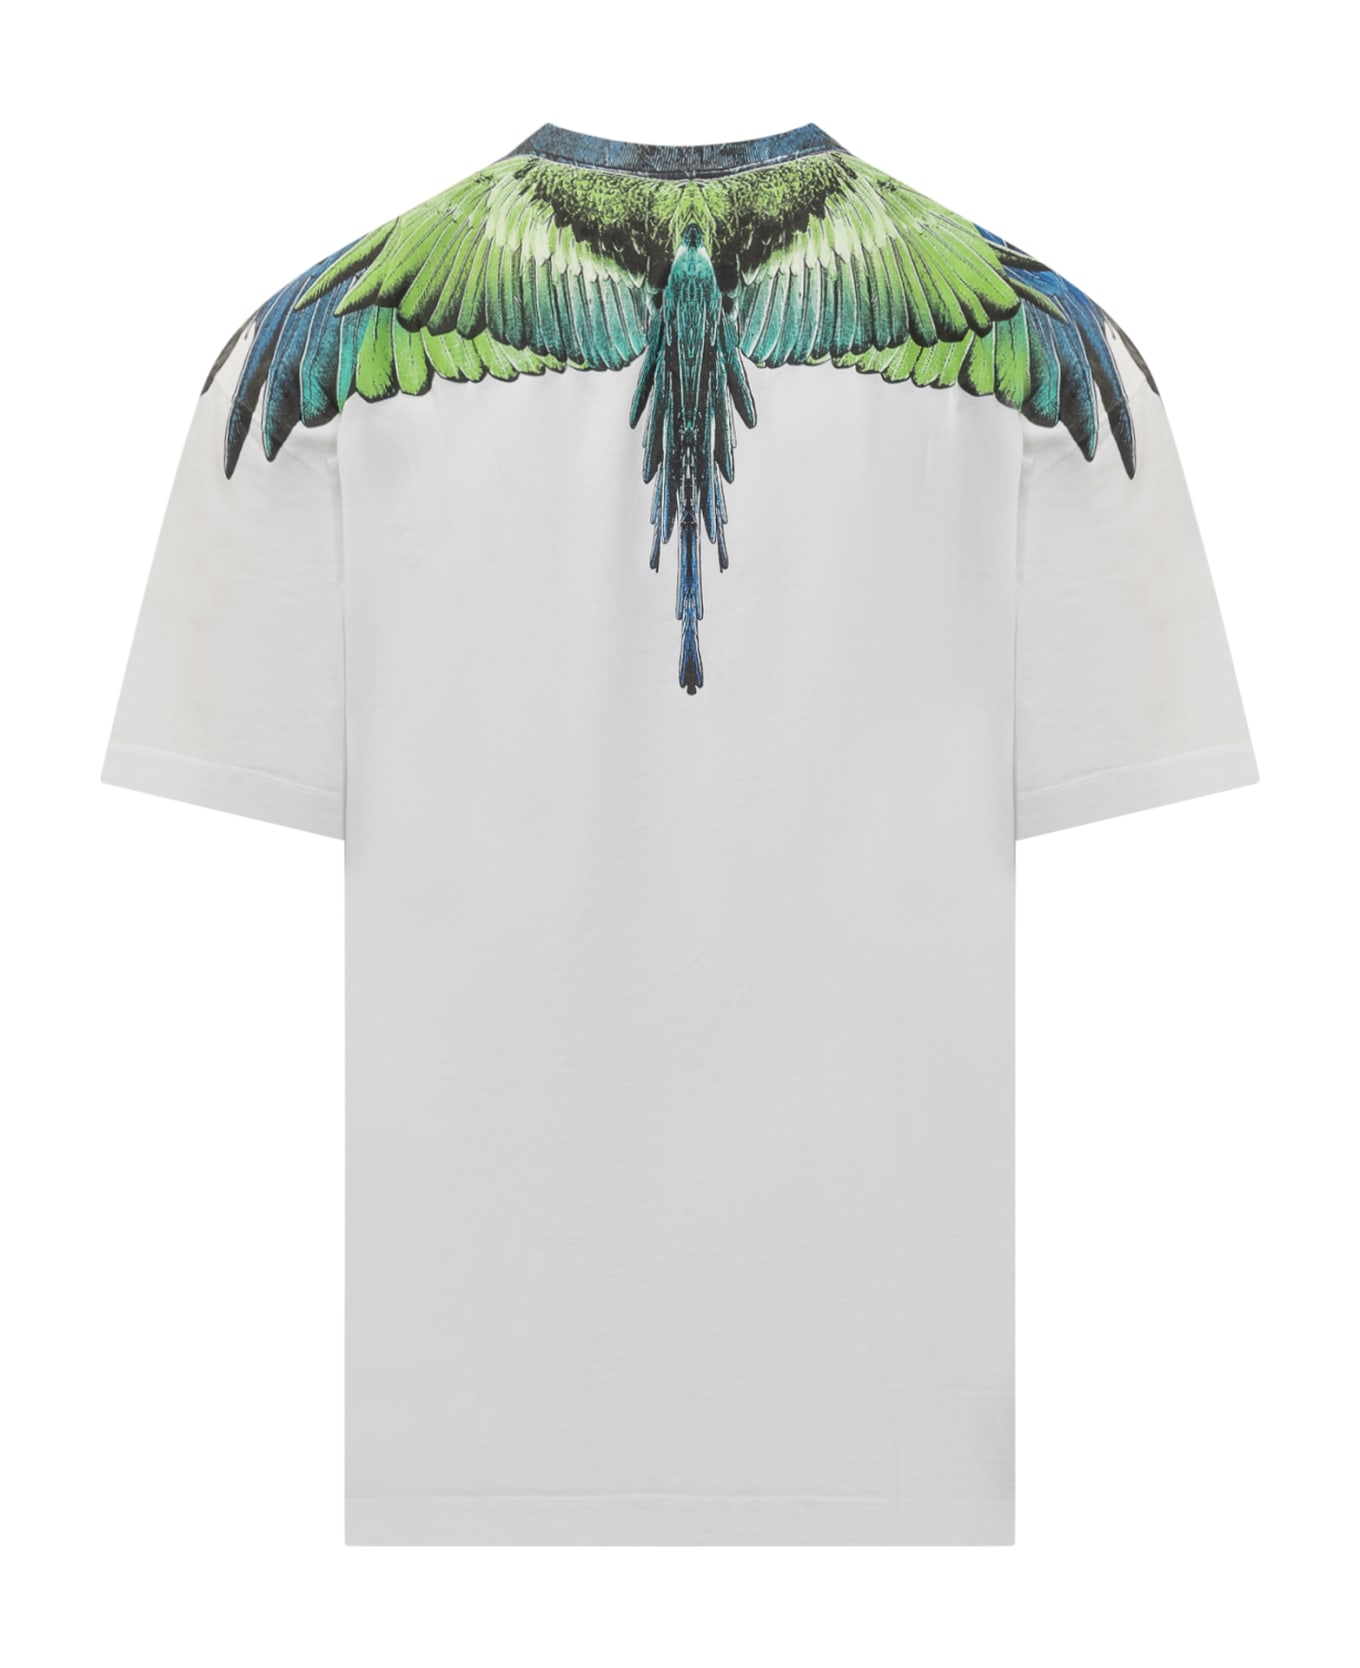 Marcelo Burlon Icon Wings T-shirt - White Light Green シャツ